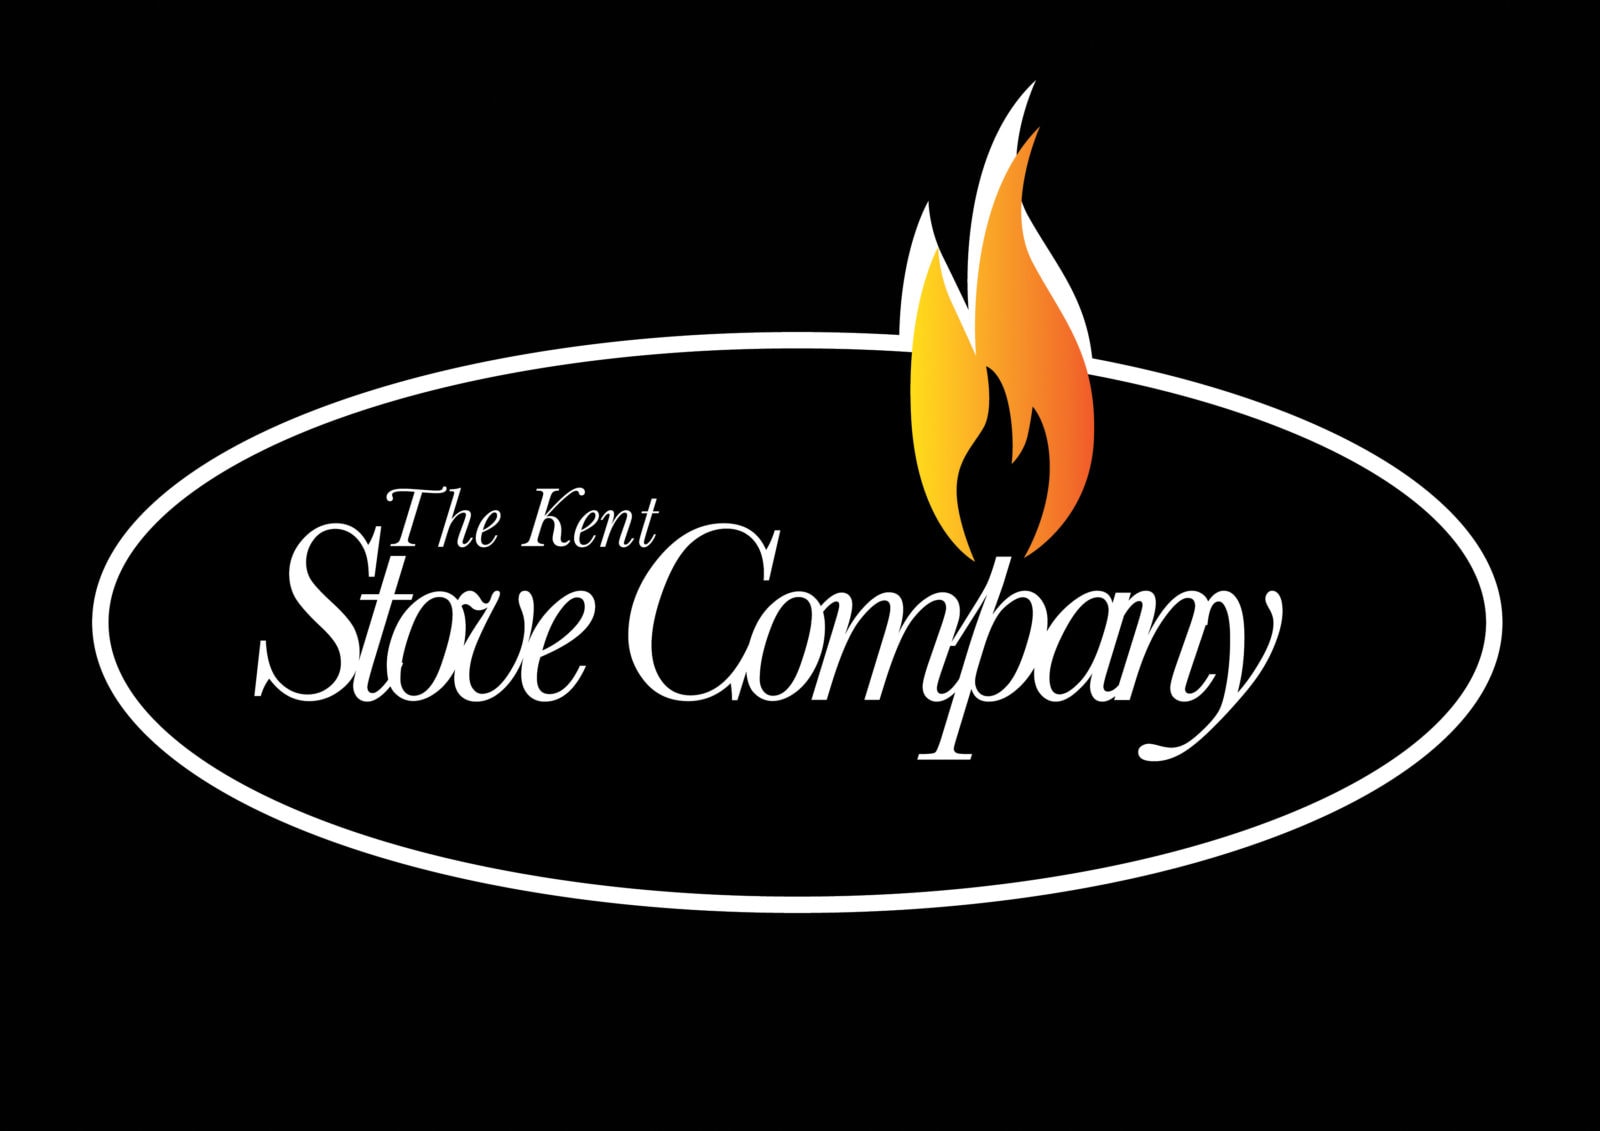 Kent Stove Company - Logo1 BLAKC